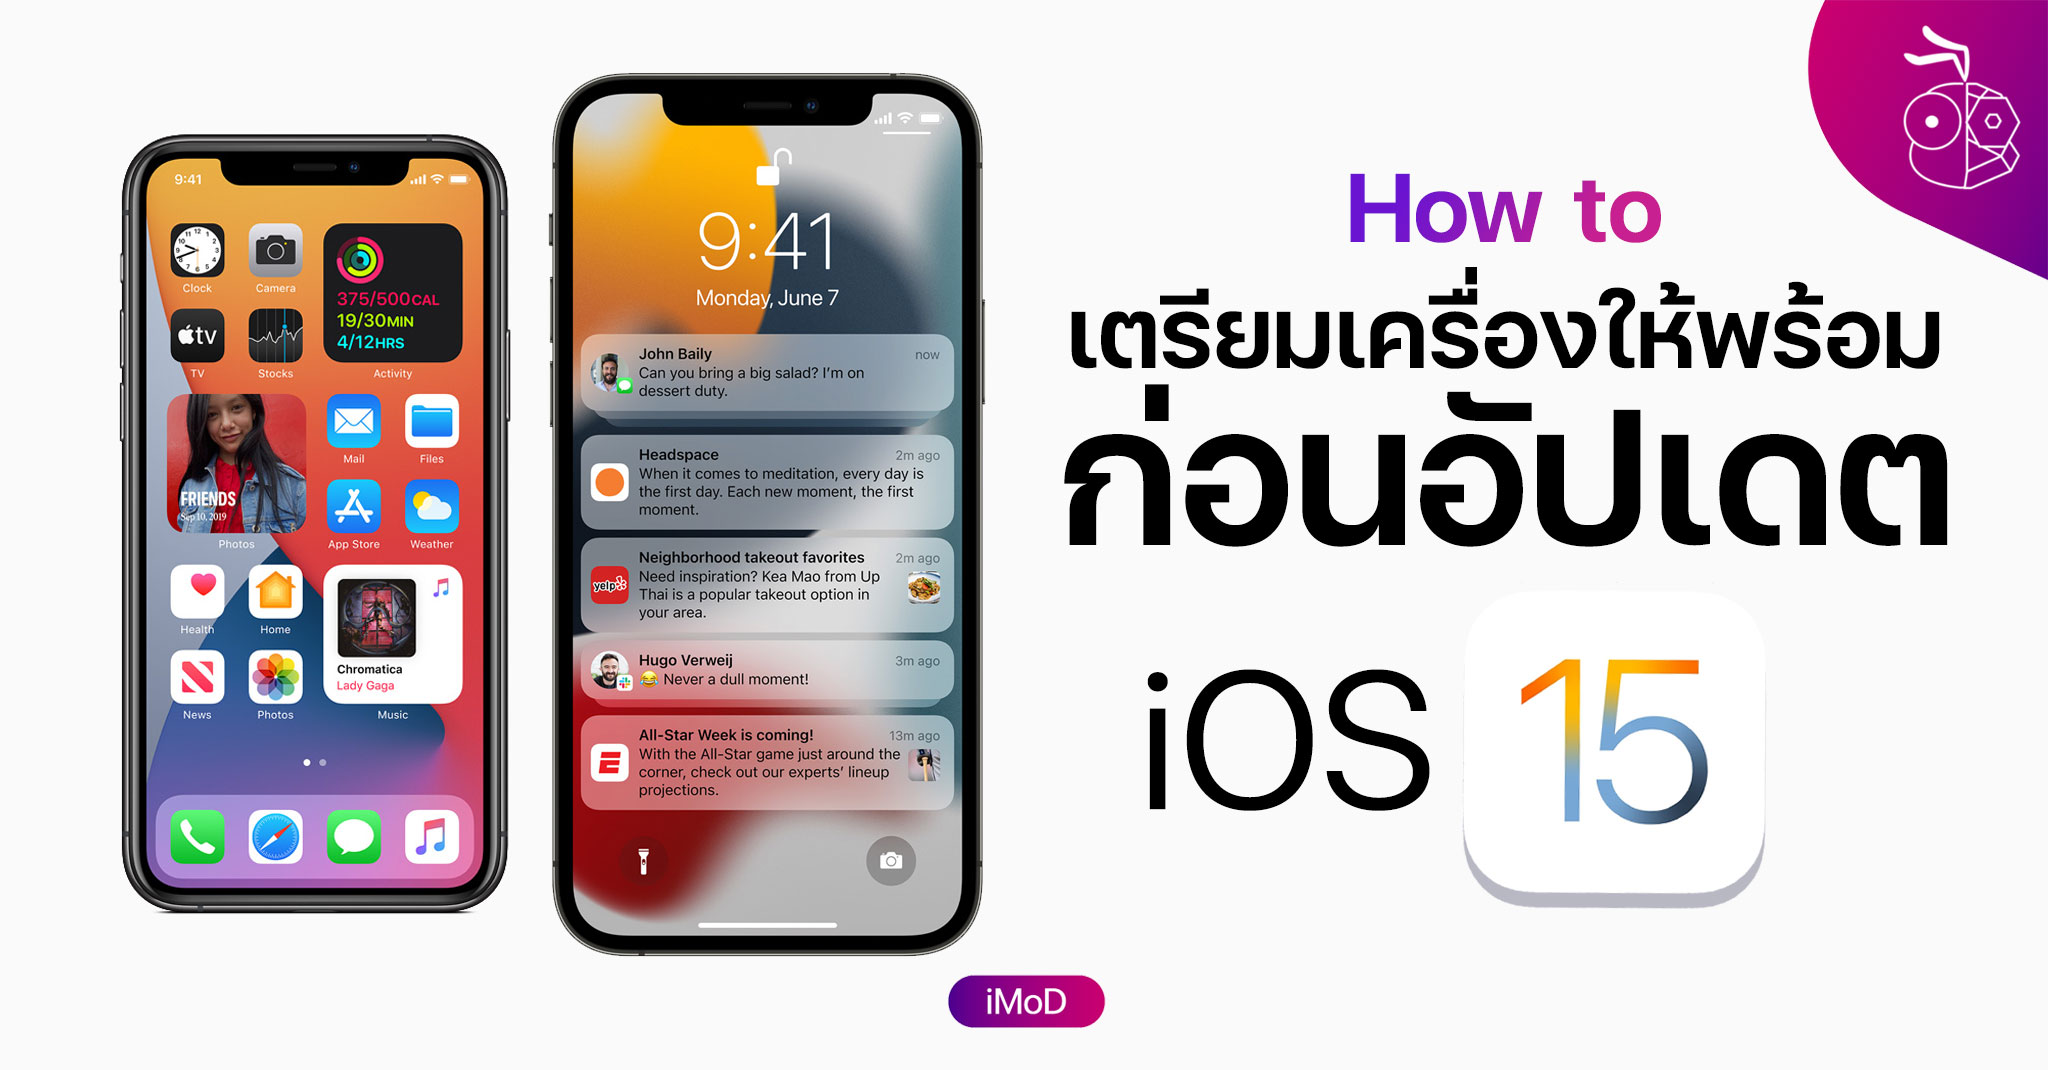 Ready go to ... https://www.iphonemod.net/how-to-prepare-iphone-ipod-touch-before-update-ios-15.html [ เตรียมเครื่องให้พร้อมก่อนอัปเดตเป็น iOS 15 ต้องทำอะไรบ้าง ดูเลย!]